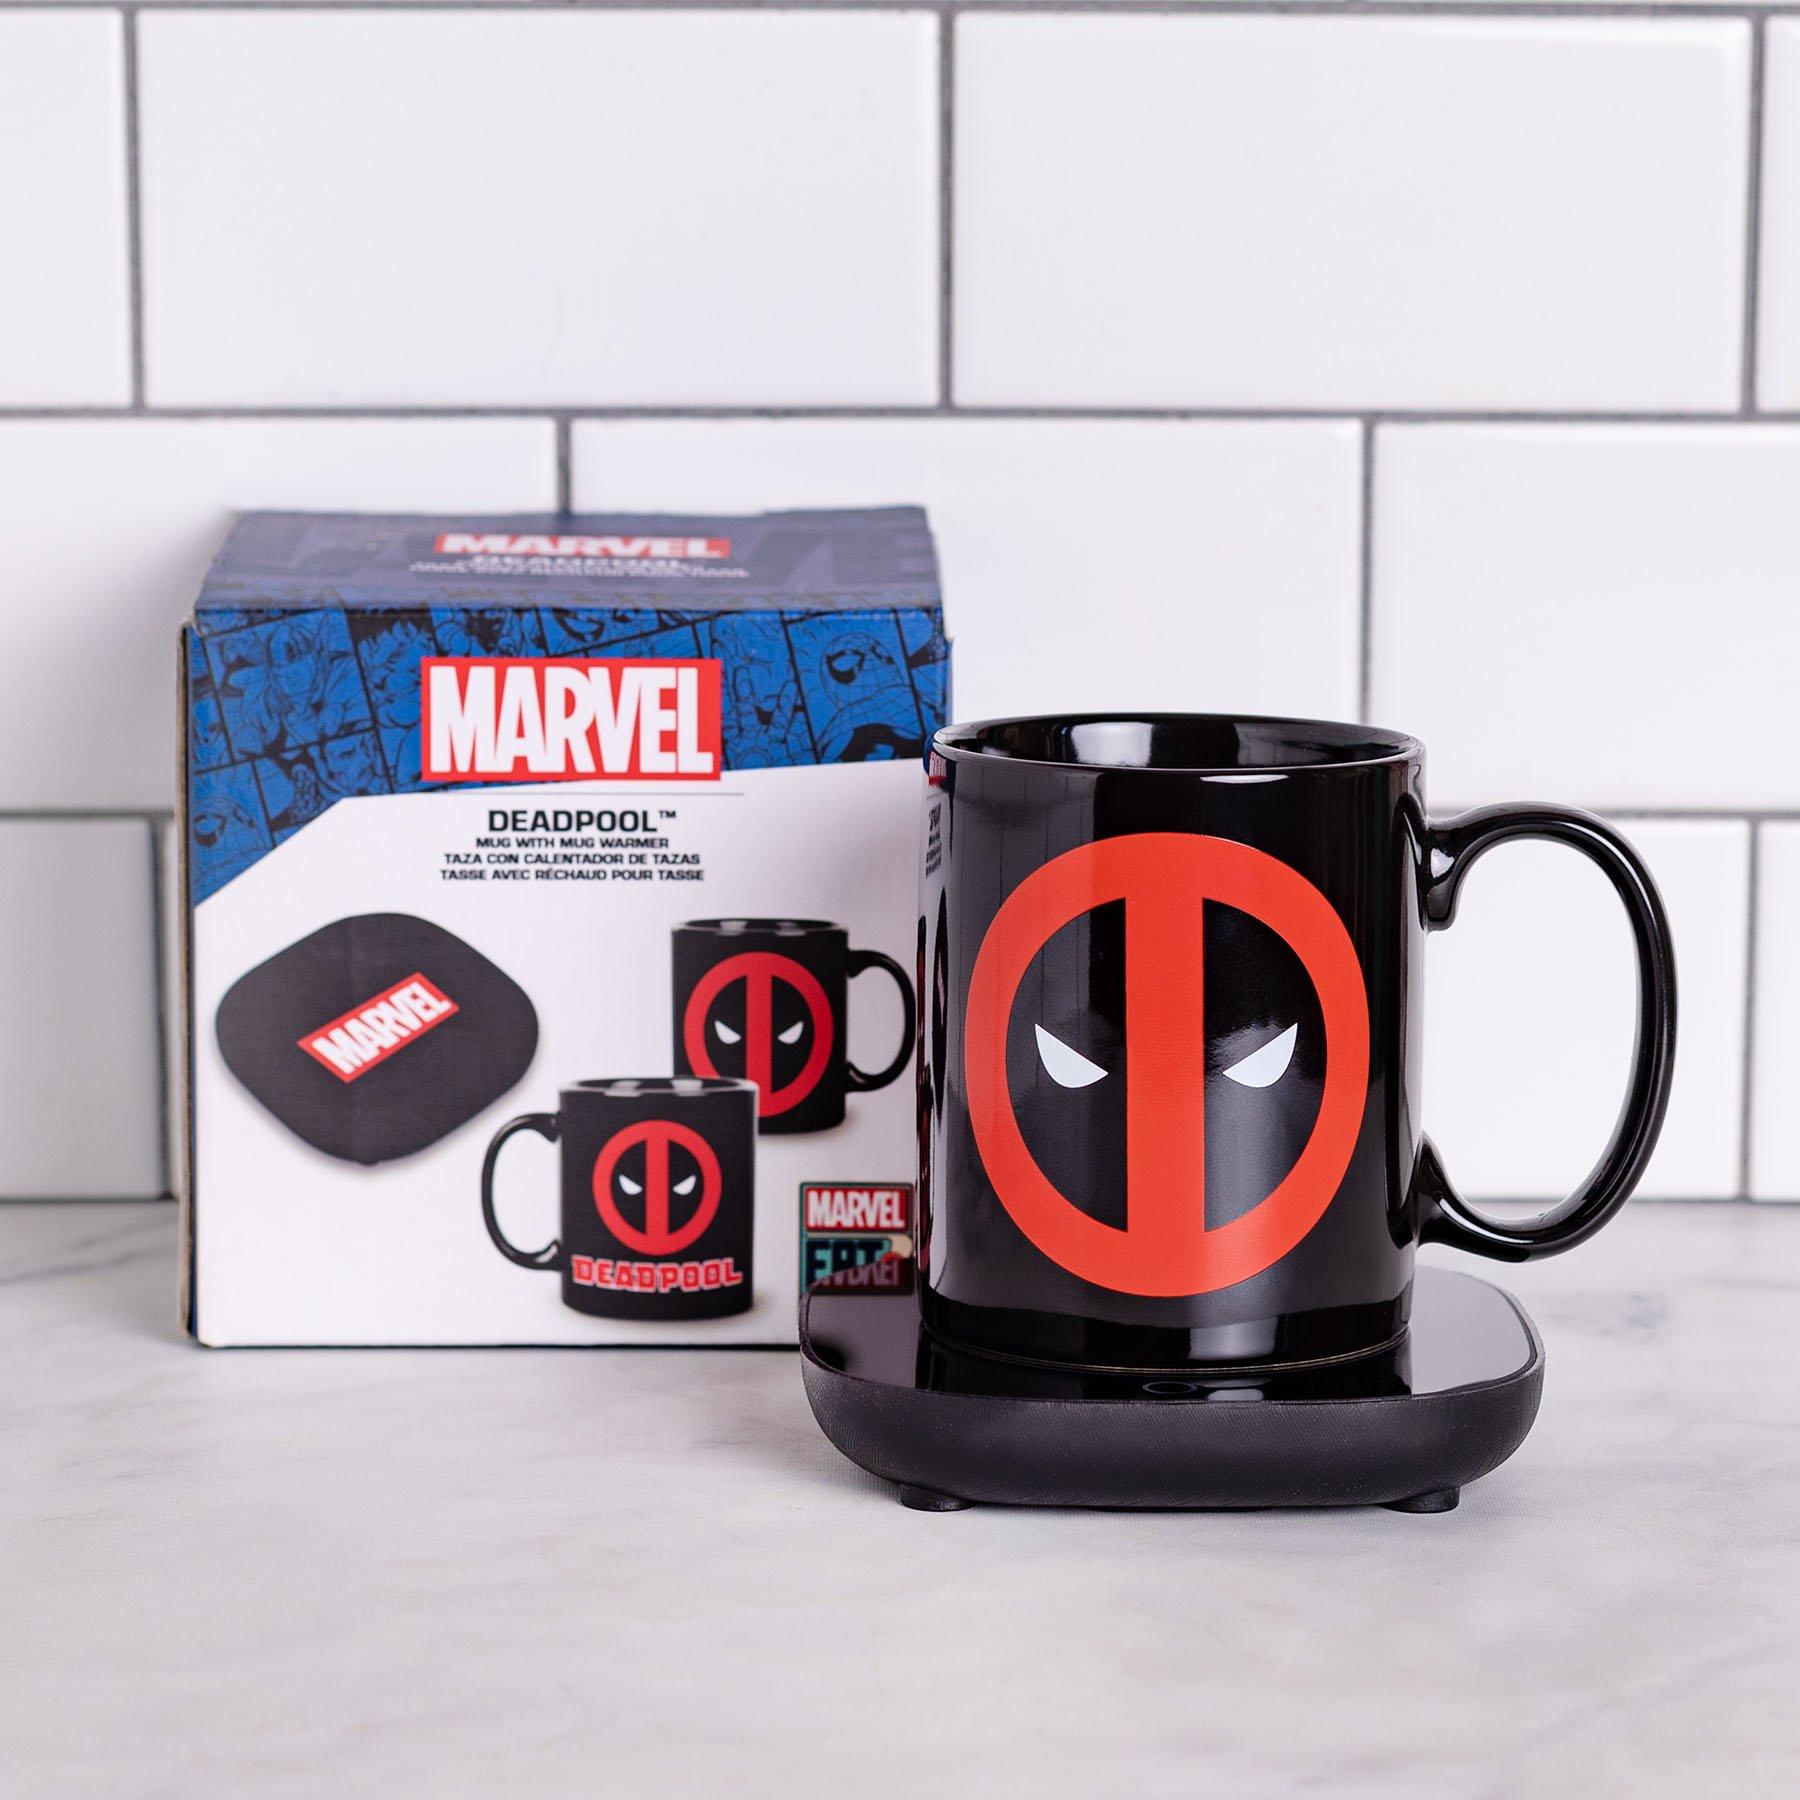 https://media.gamestop.com/i/gamestop/20005592_ALT05/Marvels-Deadpool-Mug-Warmer-with-Mug?$pdp$